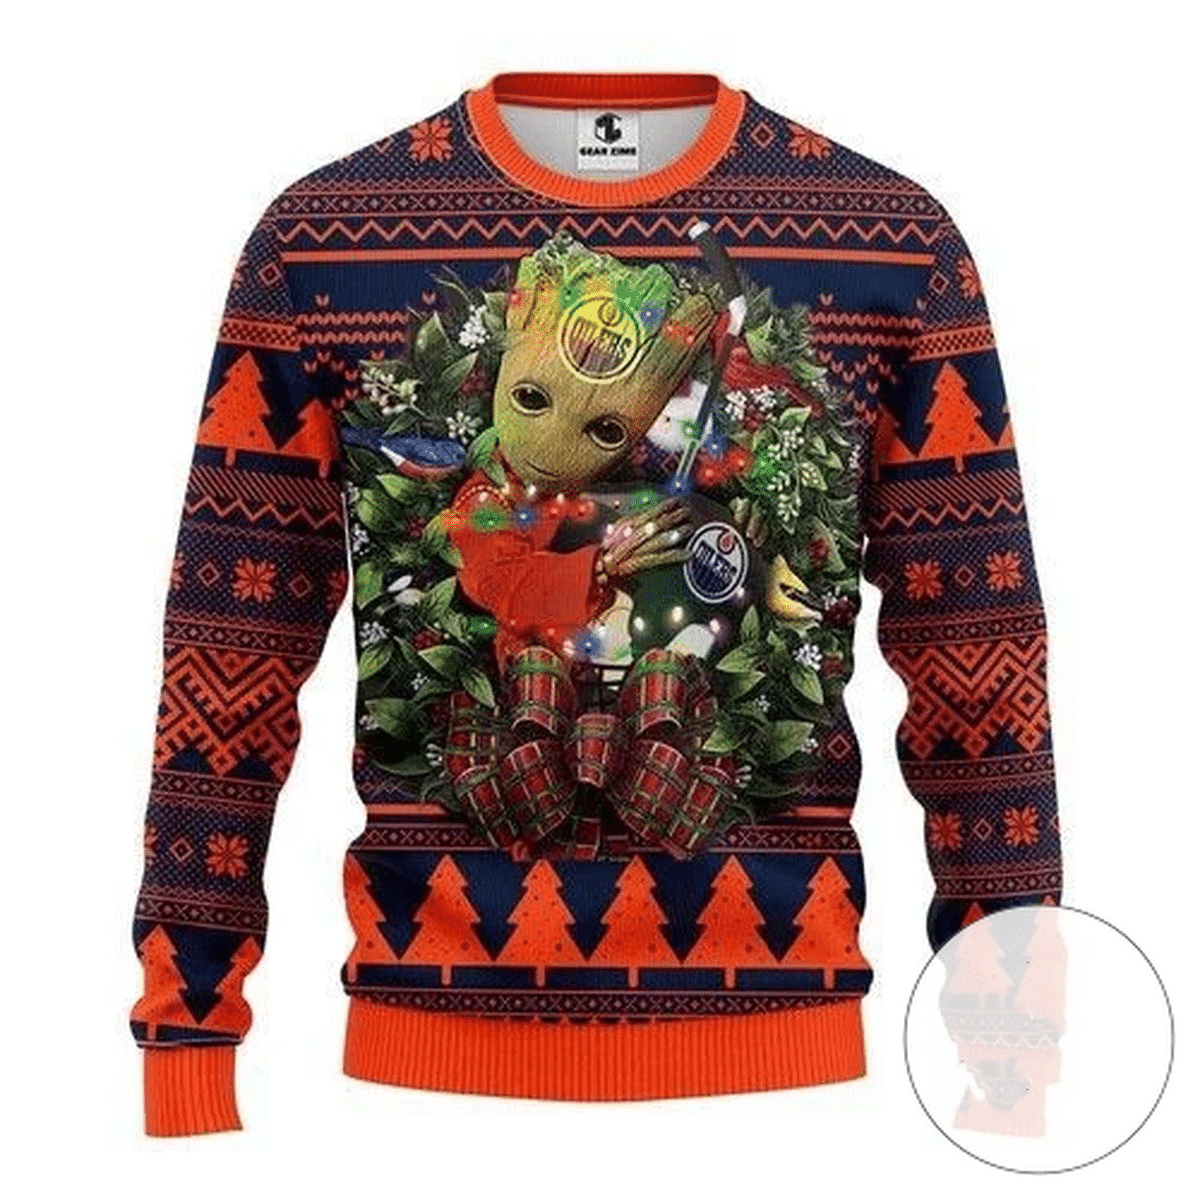 Dewalt Ugly Christmas Sweater   133